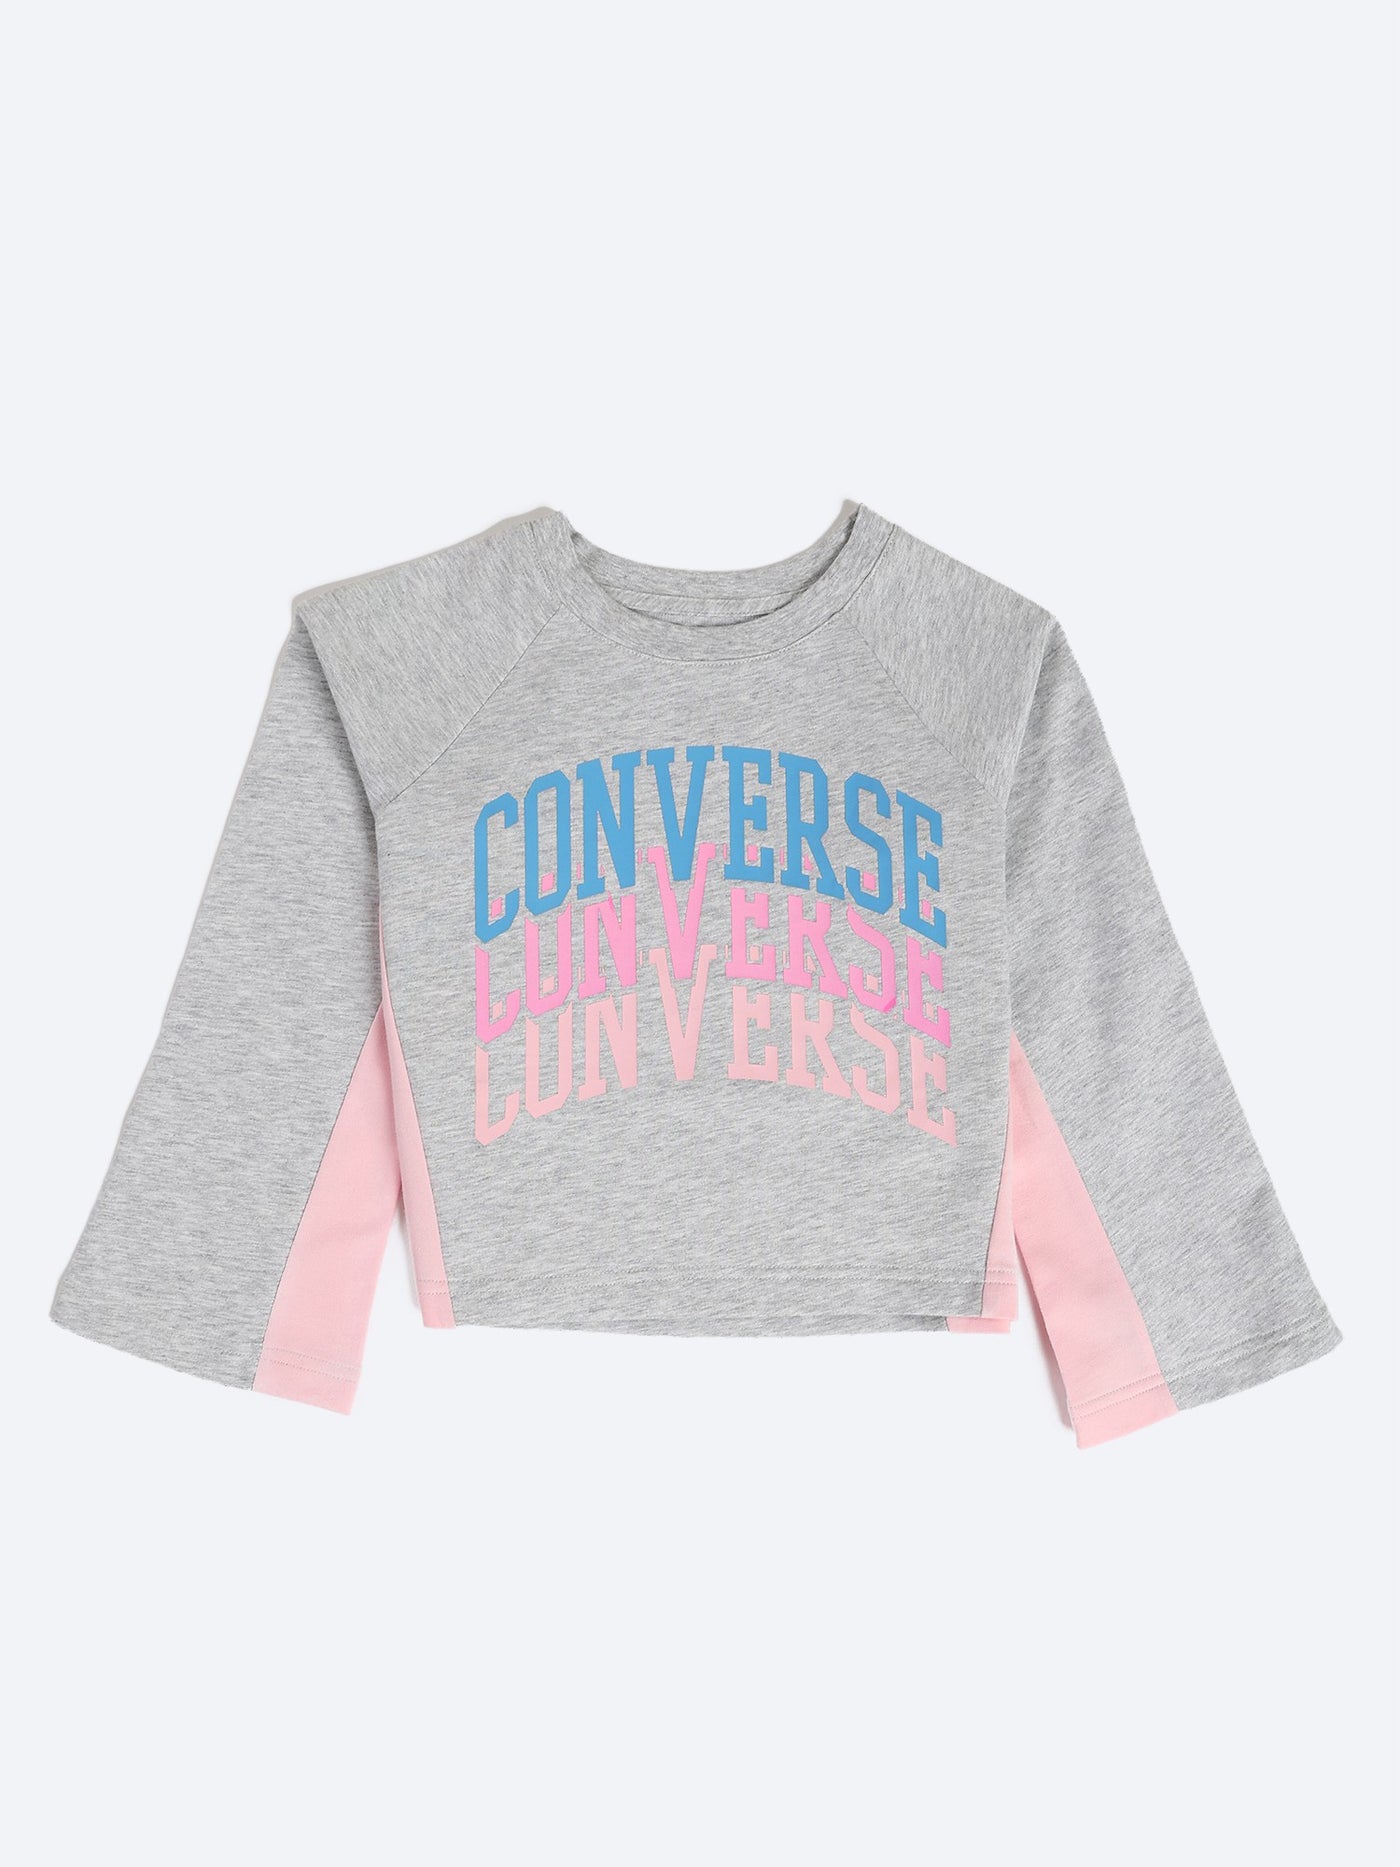 Converse Kids Girls Colorful Sweatshirt